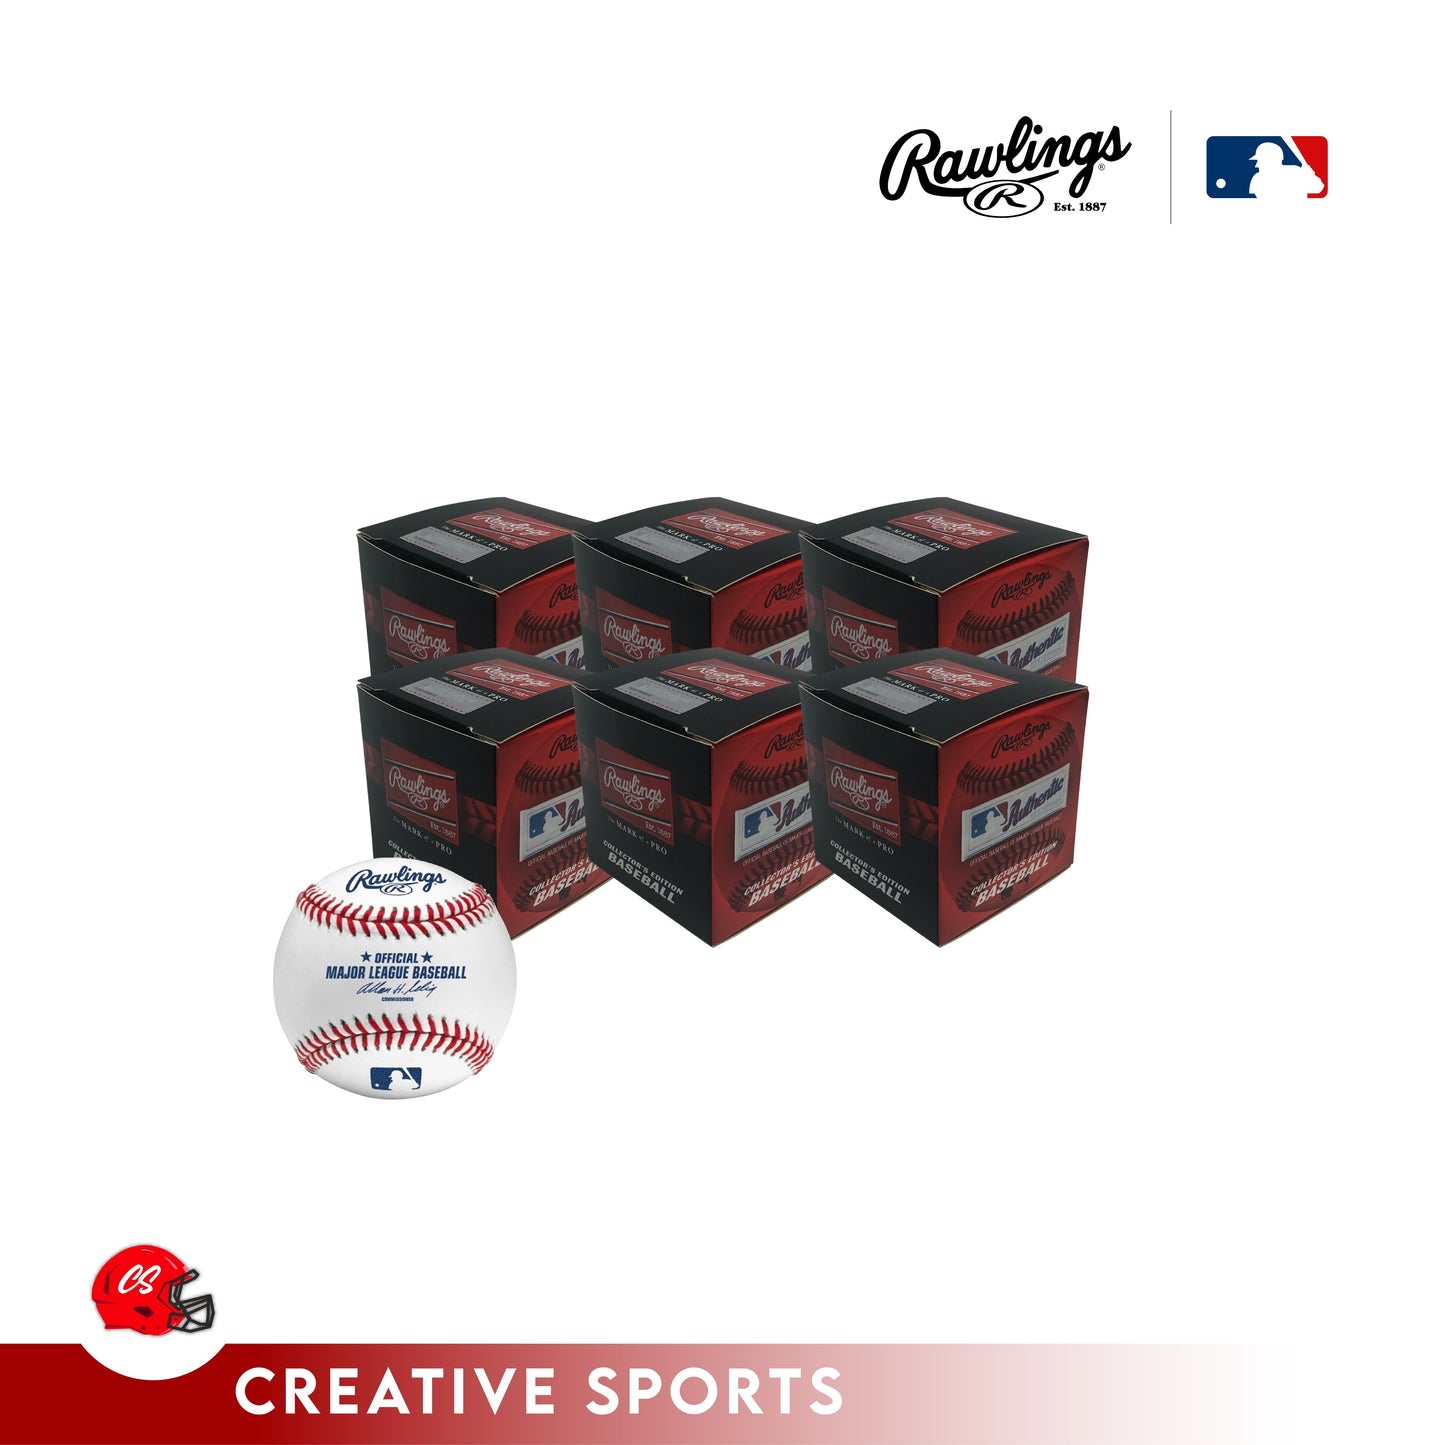 ROMLB Rawlings Official MLB Leather Game Baseball Robert Manfred - 6